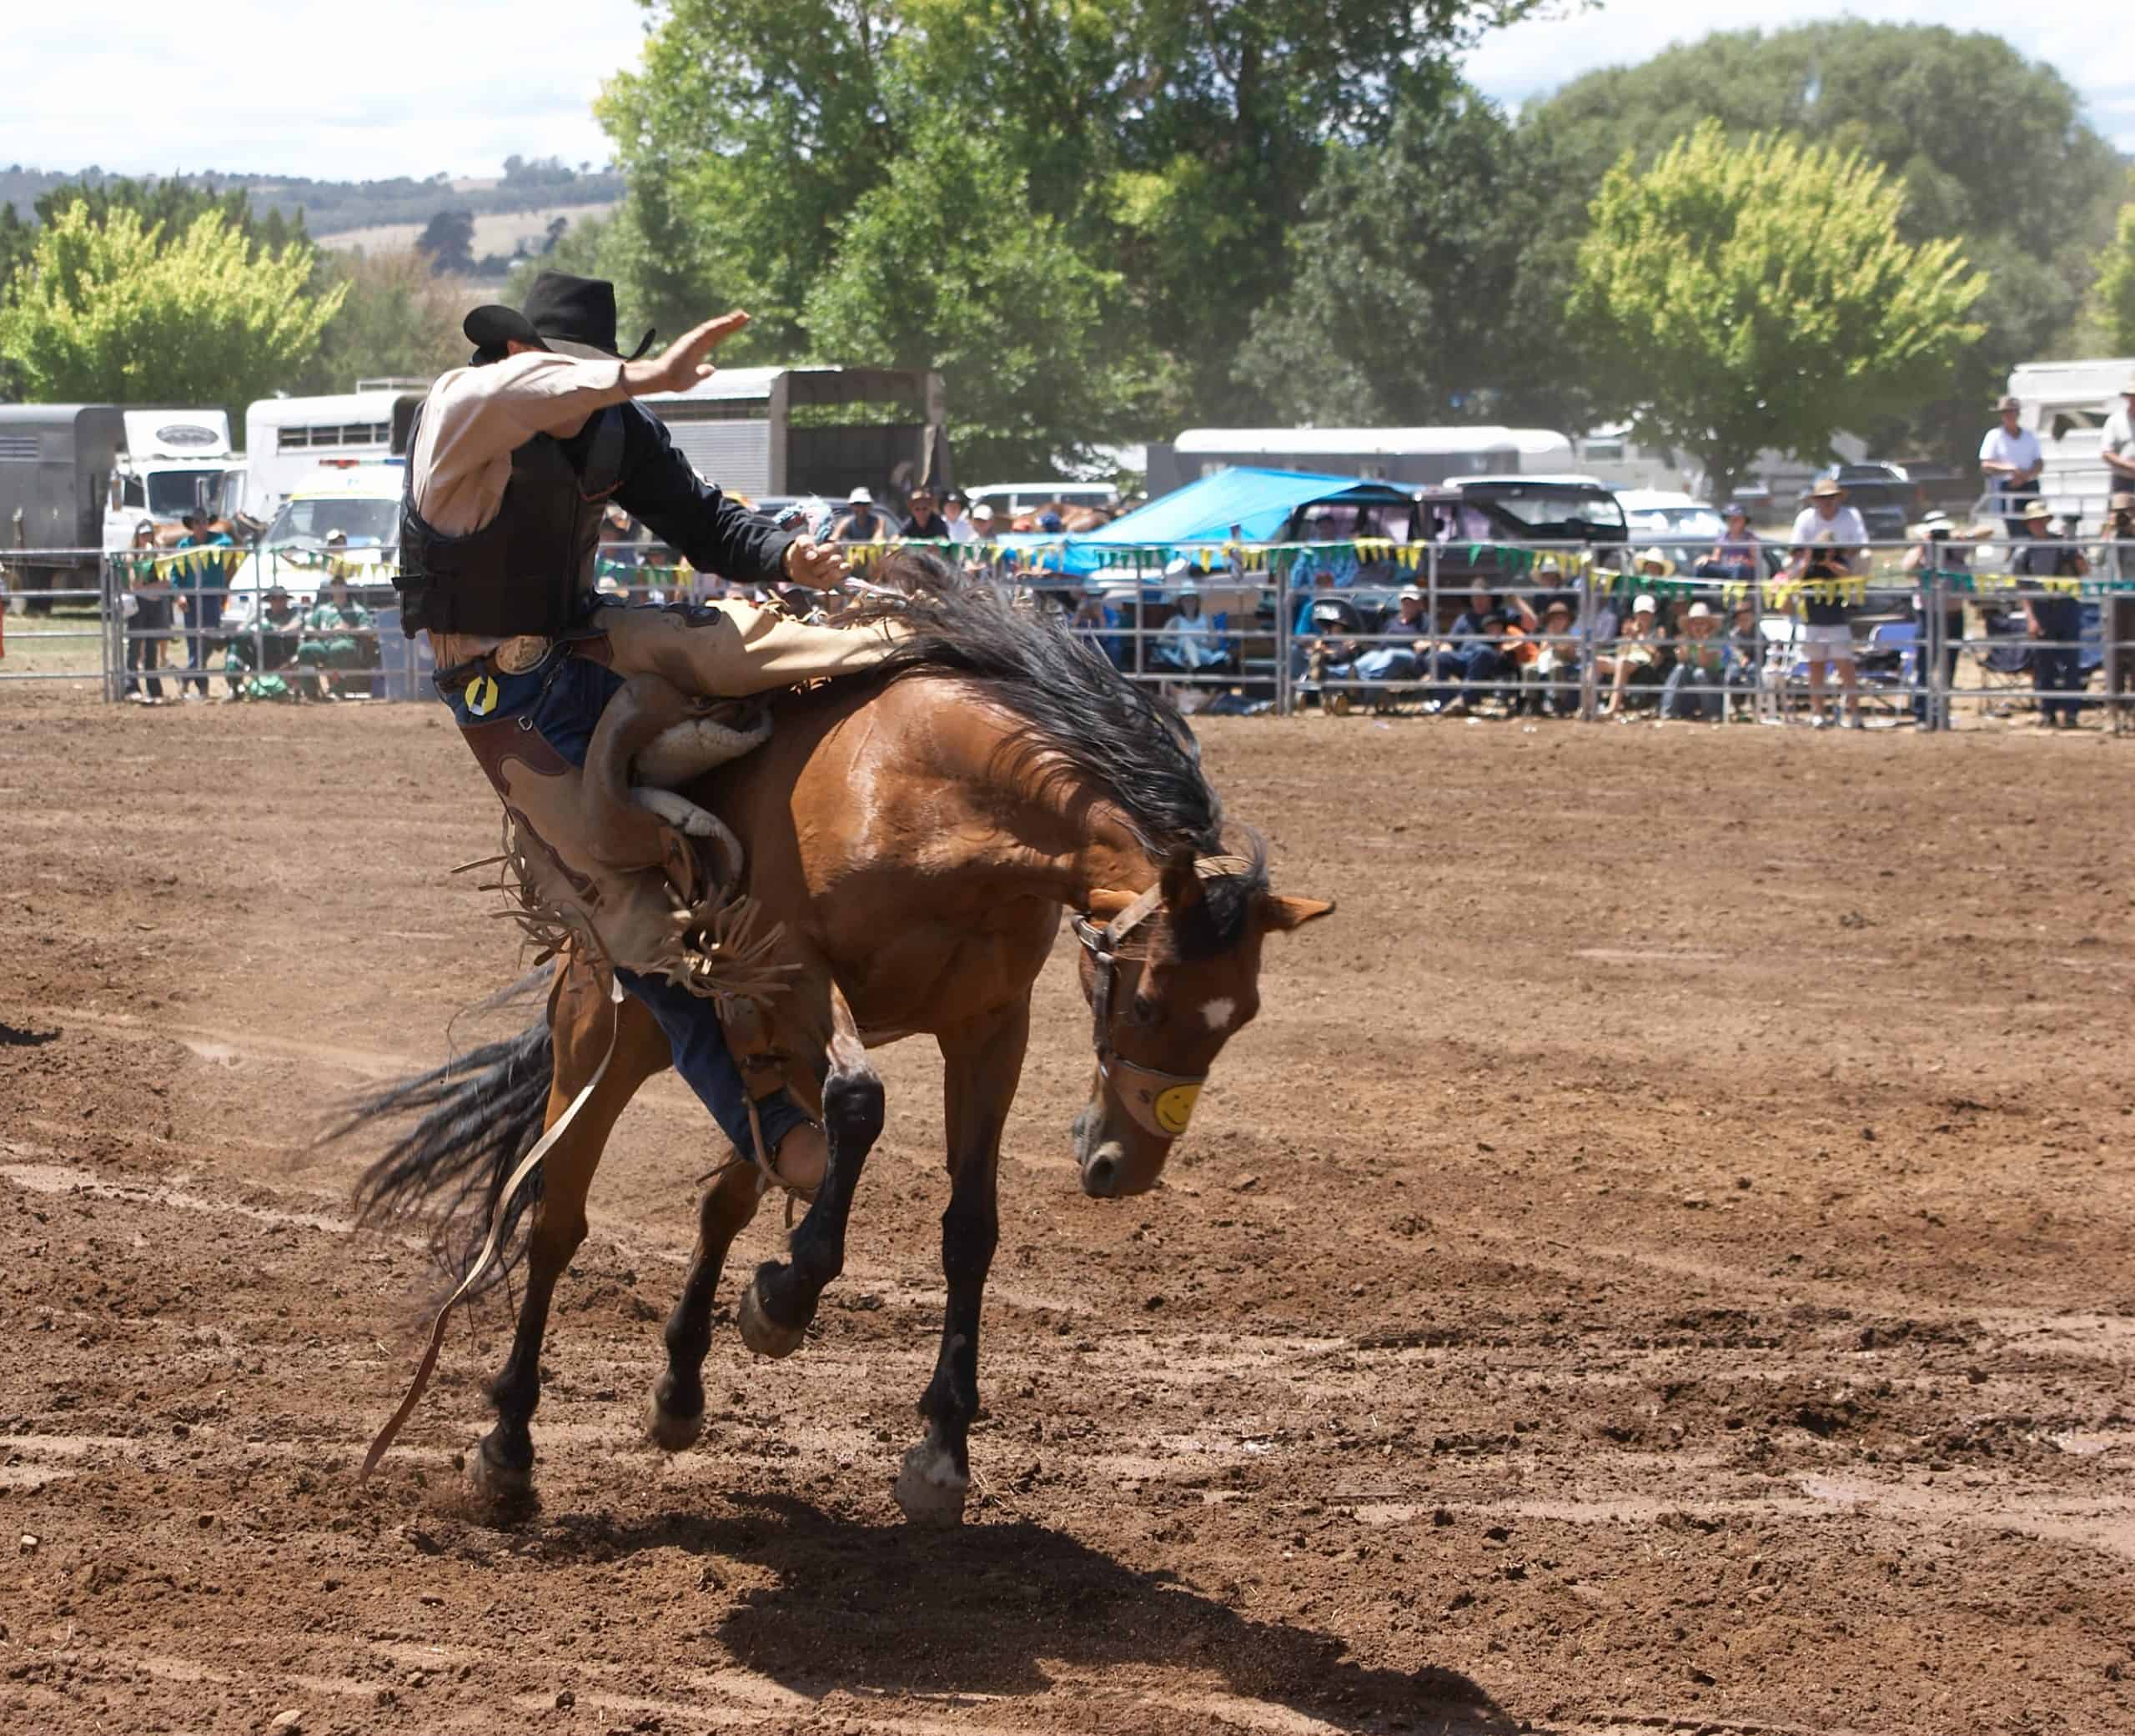 Cowboy riding bucking horse at a rodeo